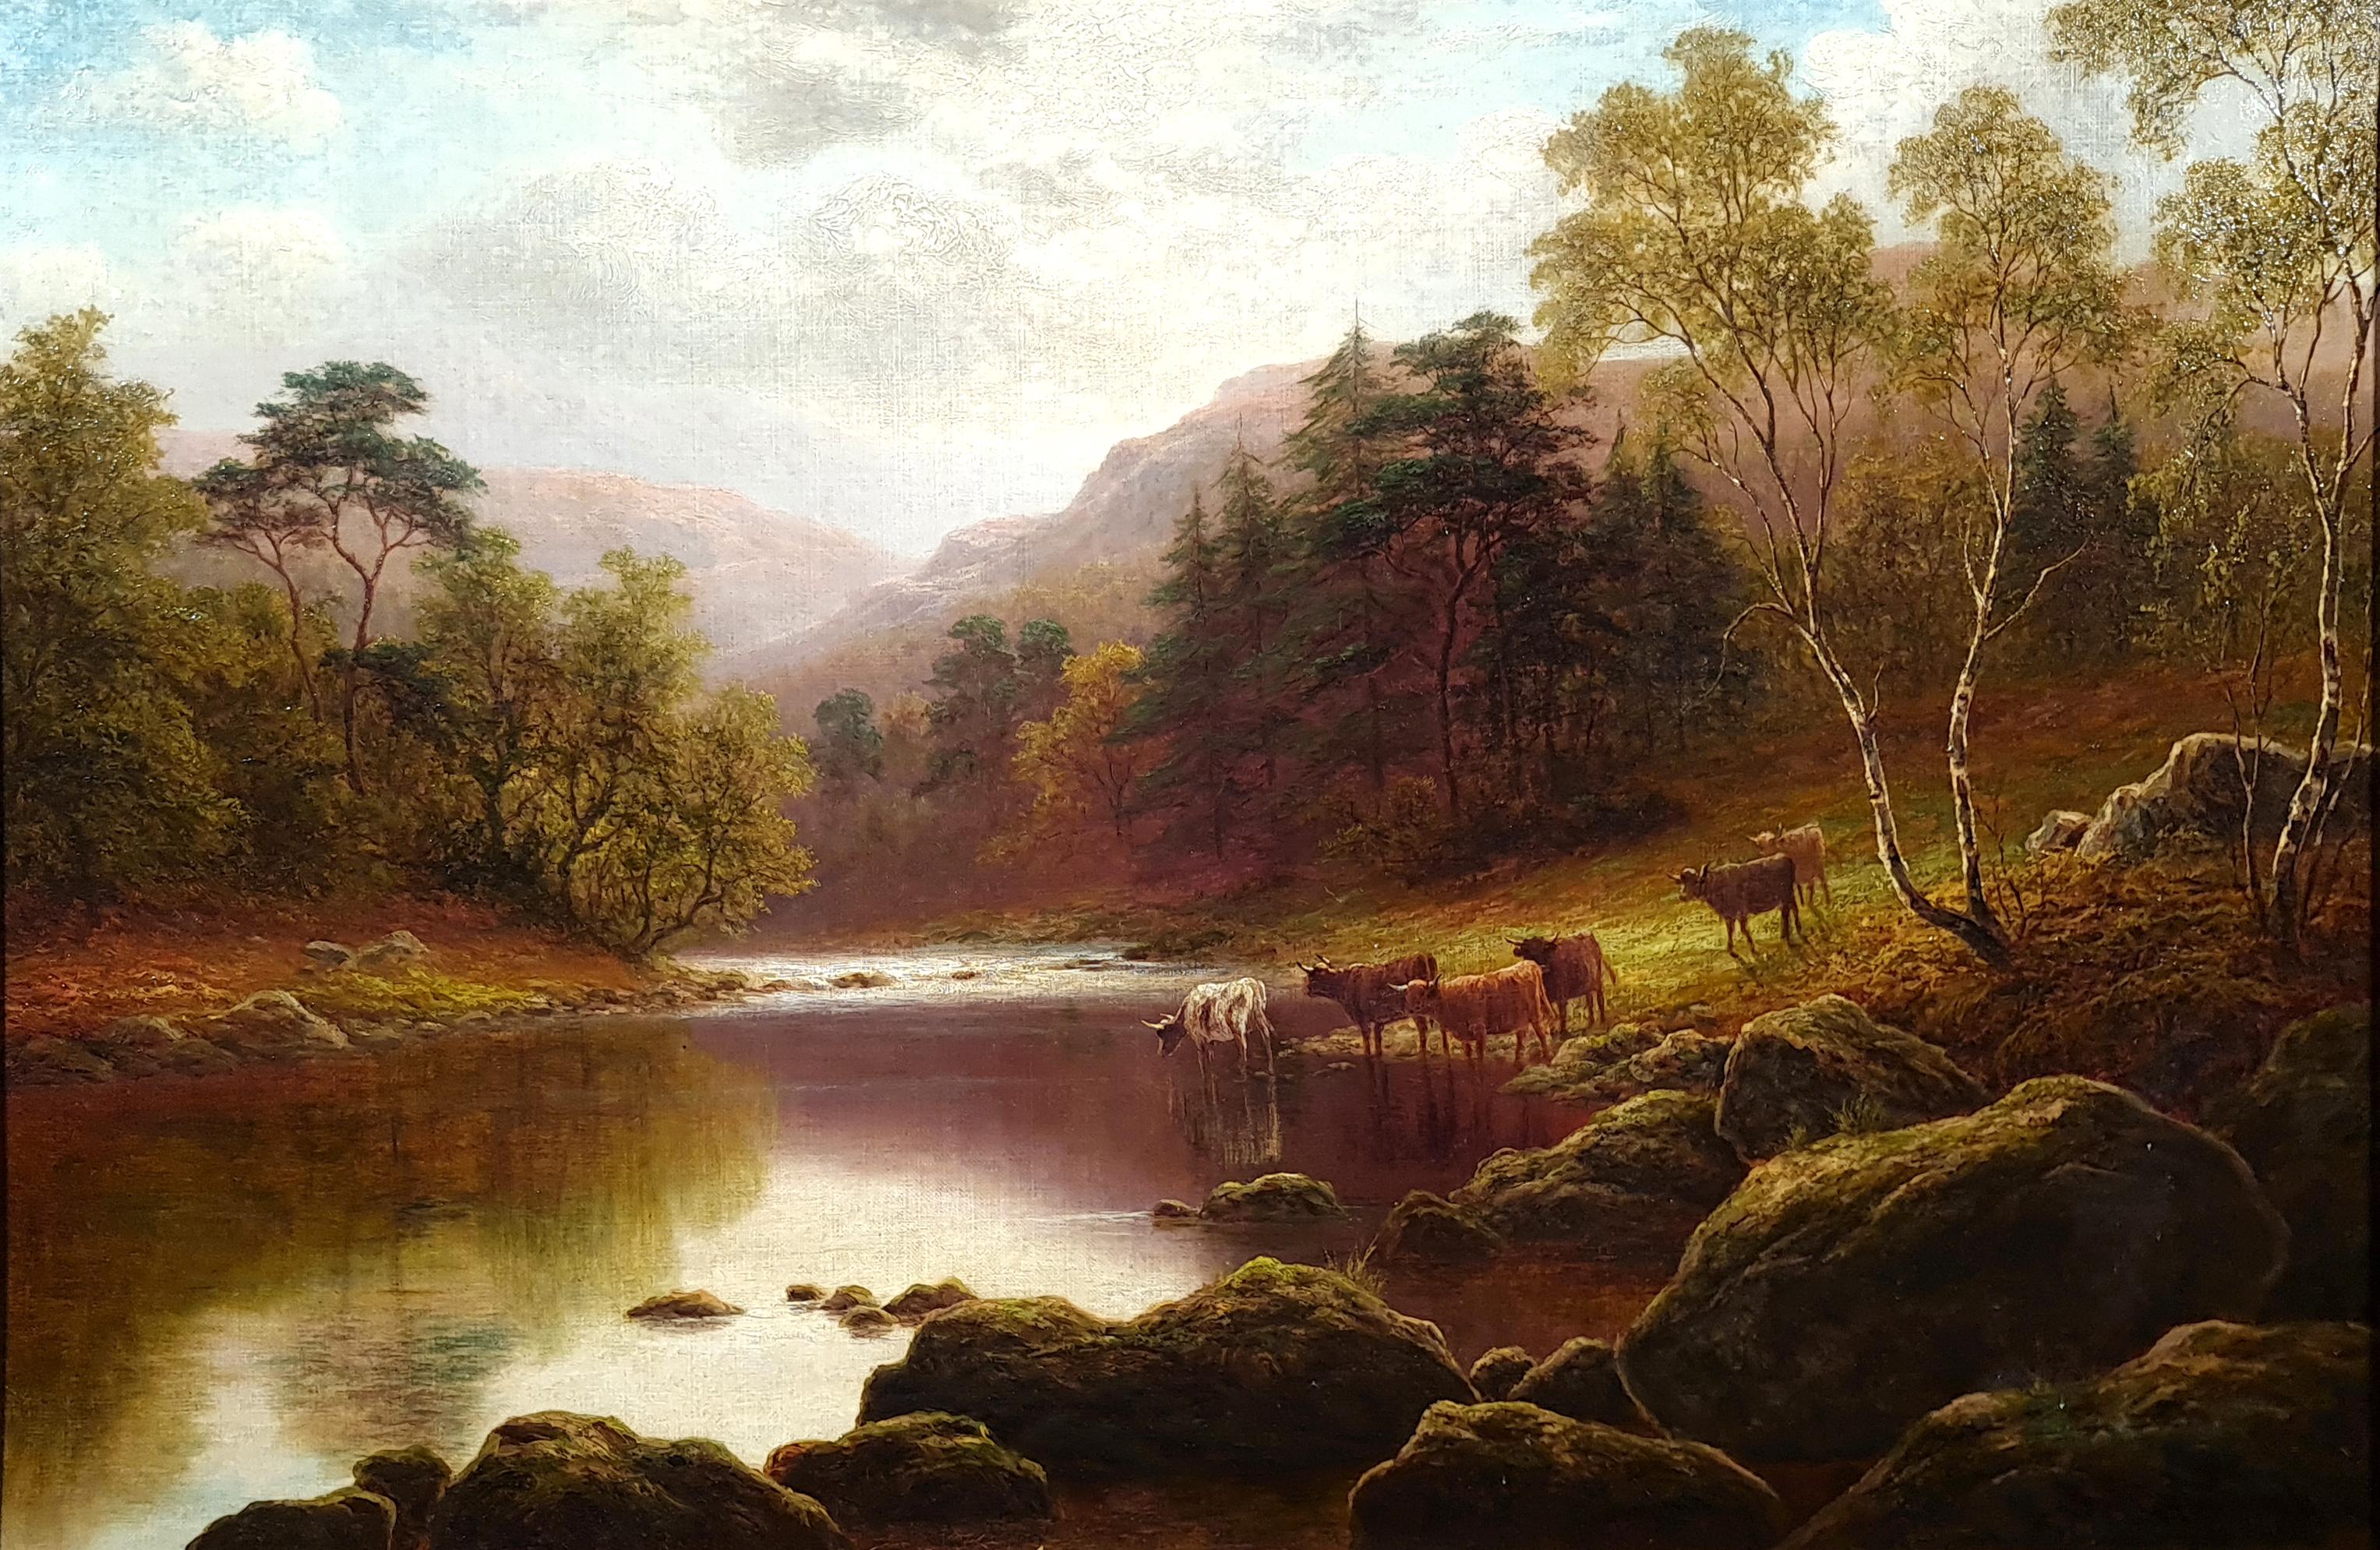 The Wales and Wales, Nord du Pays de Galles - Painting de William Mellor